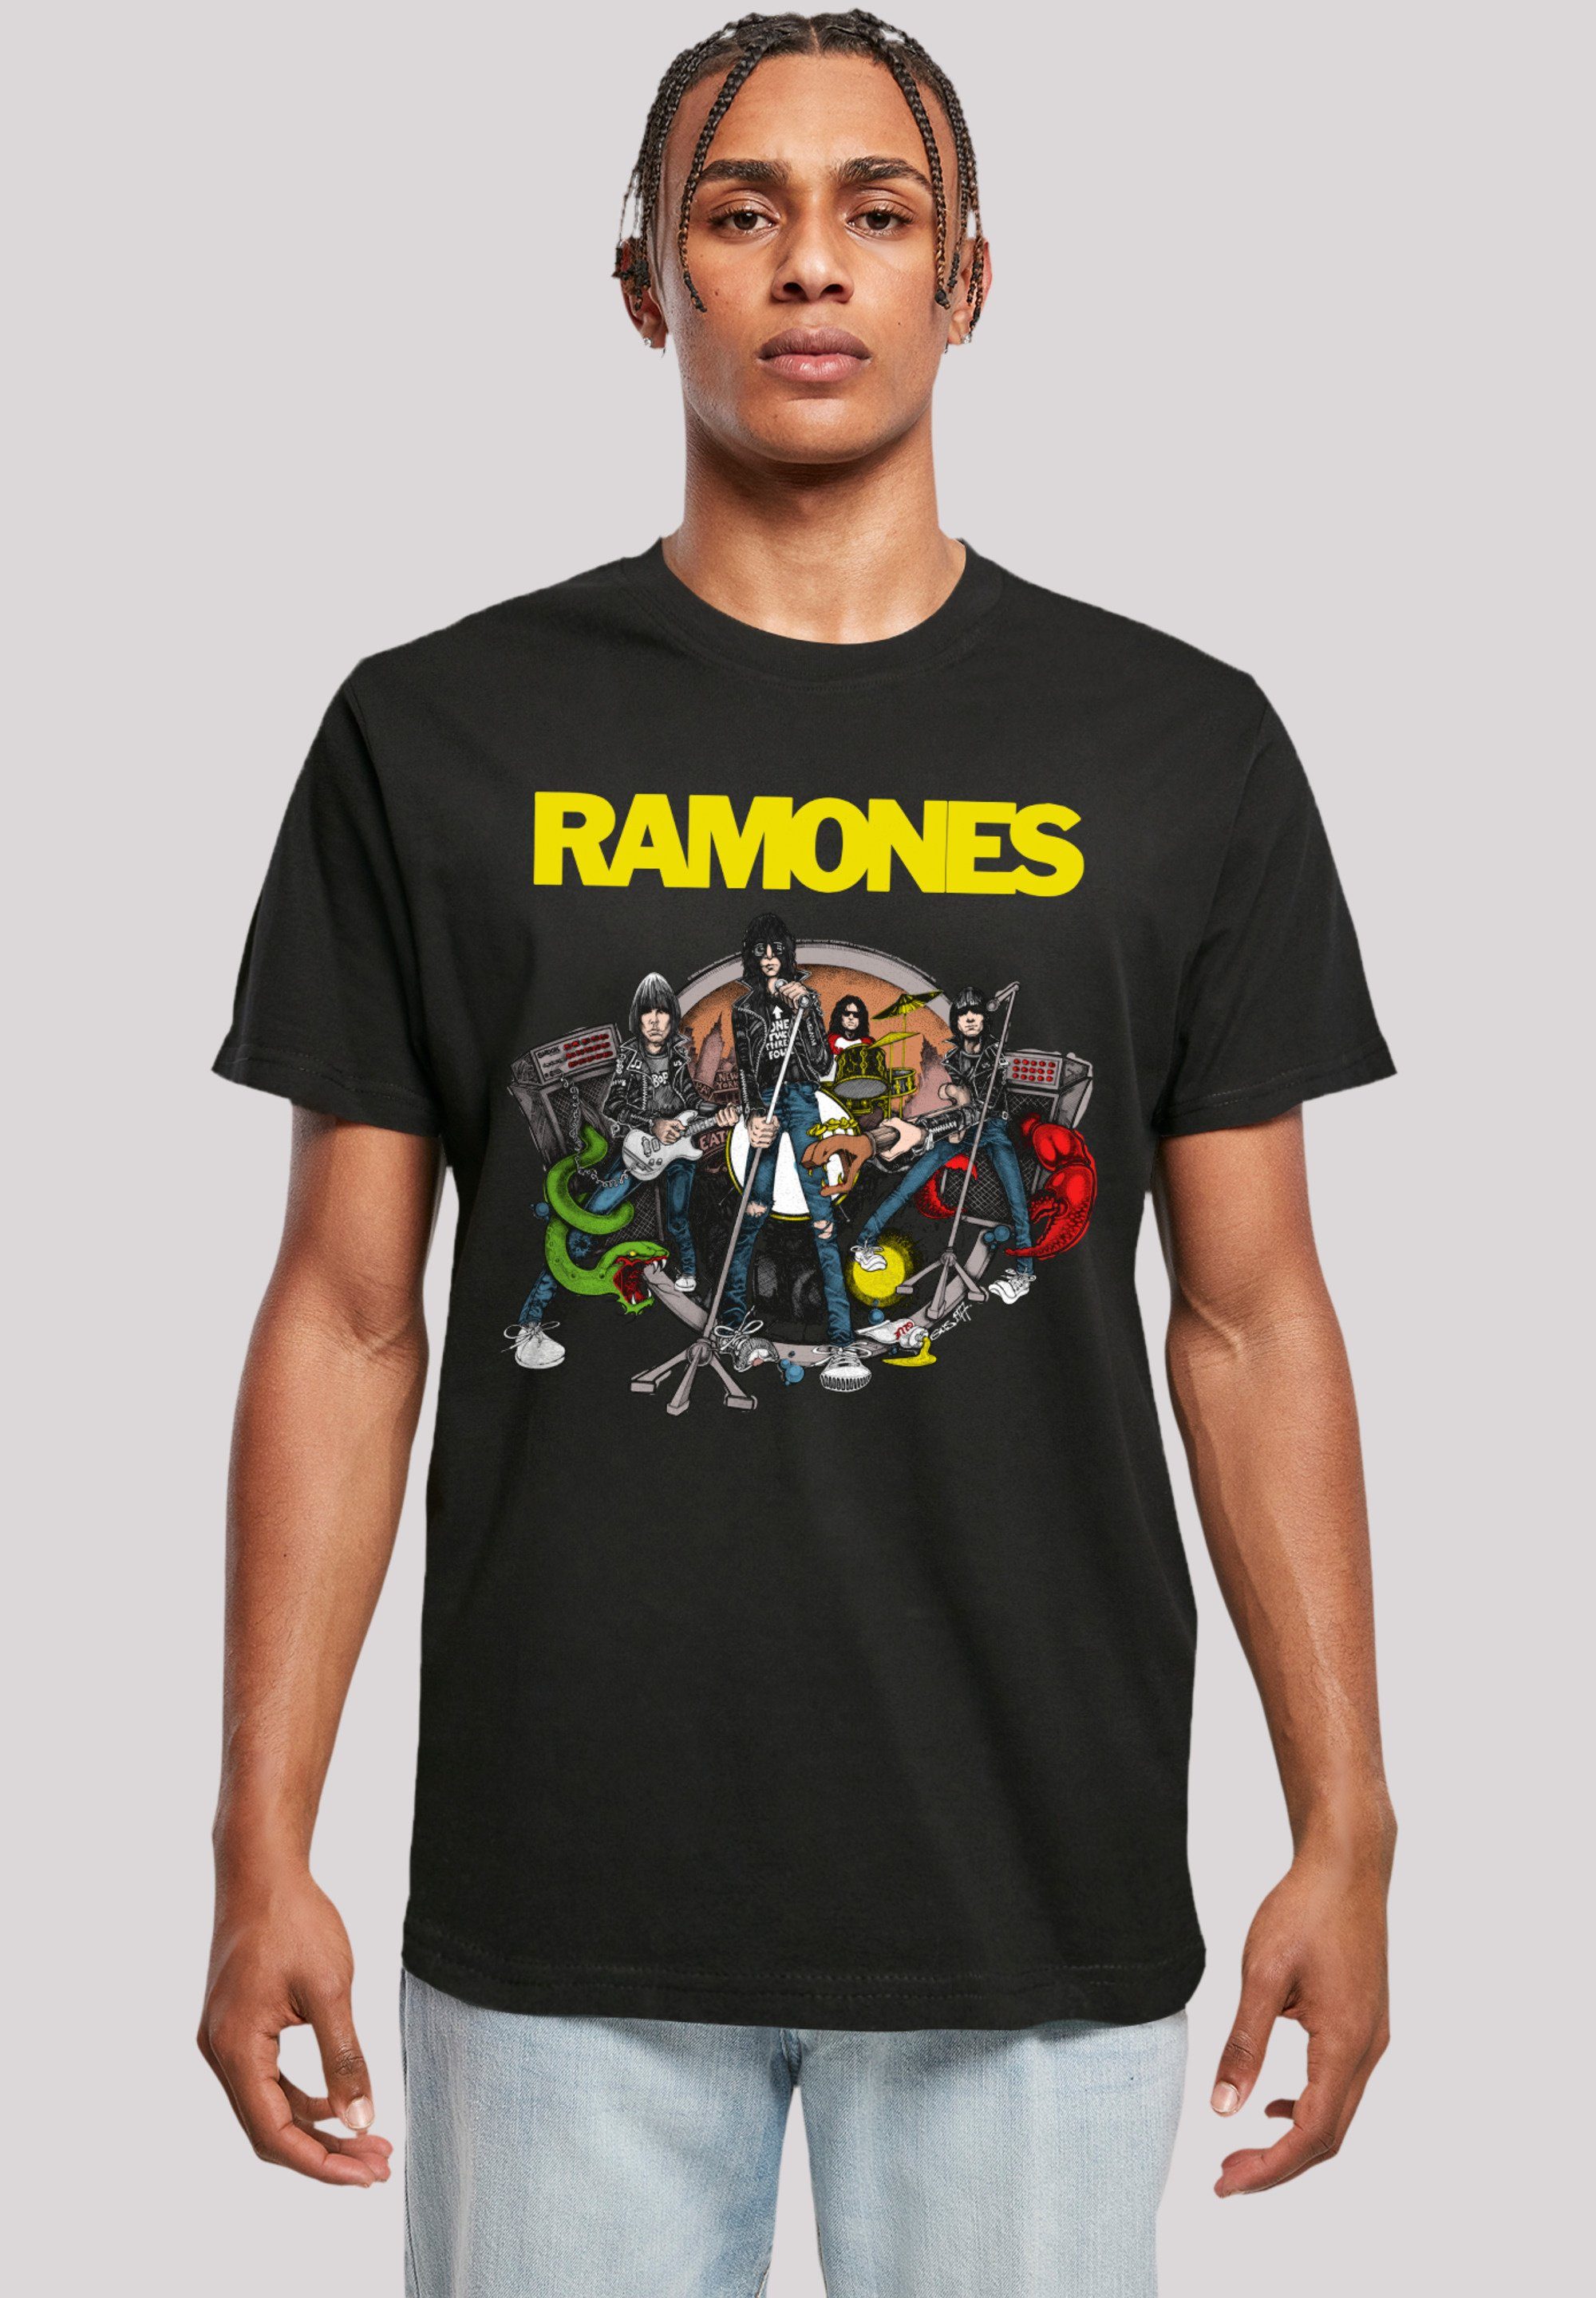 To T-Shirt Premium Ramones Road Rock Qualität, F4NT4STIC Band Band, Ruin Musik Rock-Musik